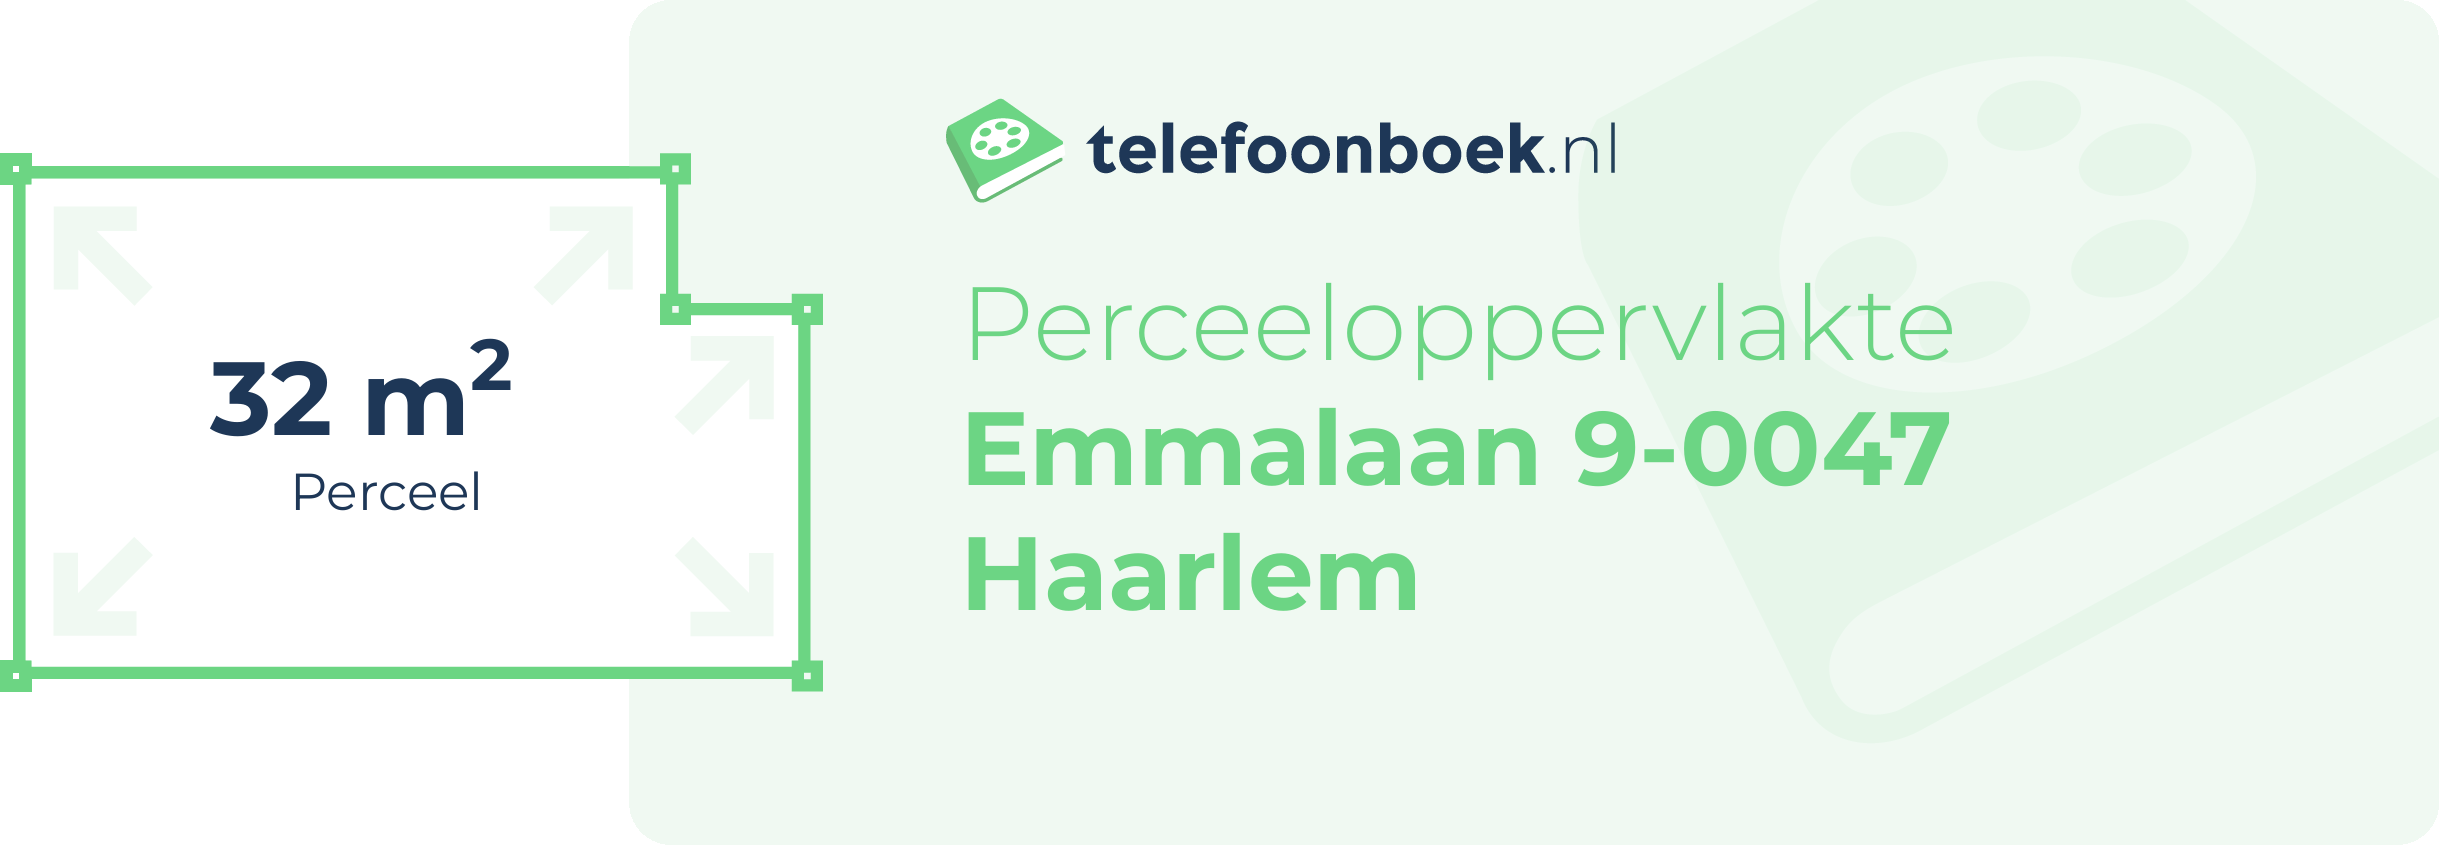 Perceeloppervlakte Emmalaan 9-0047 Haarlem